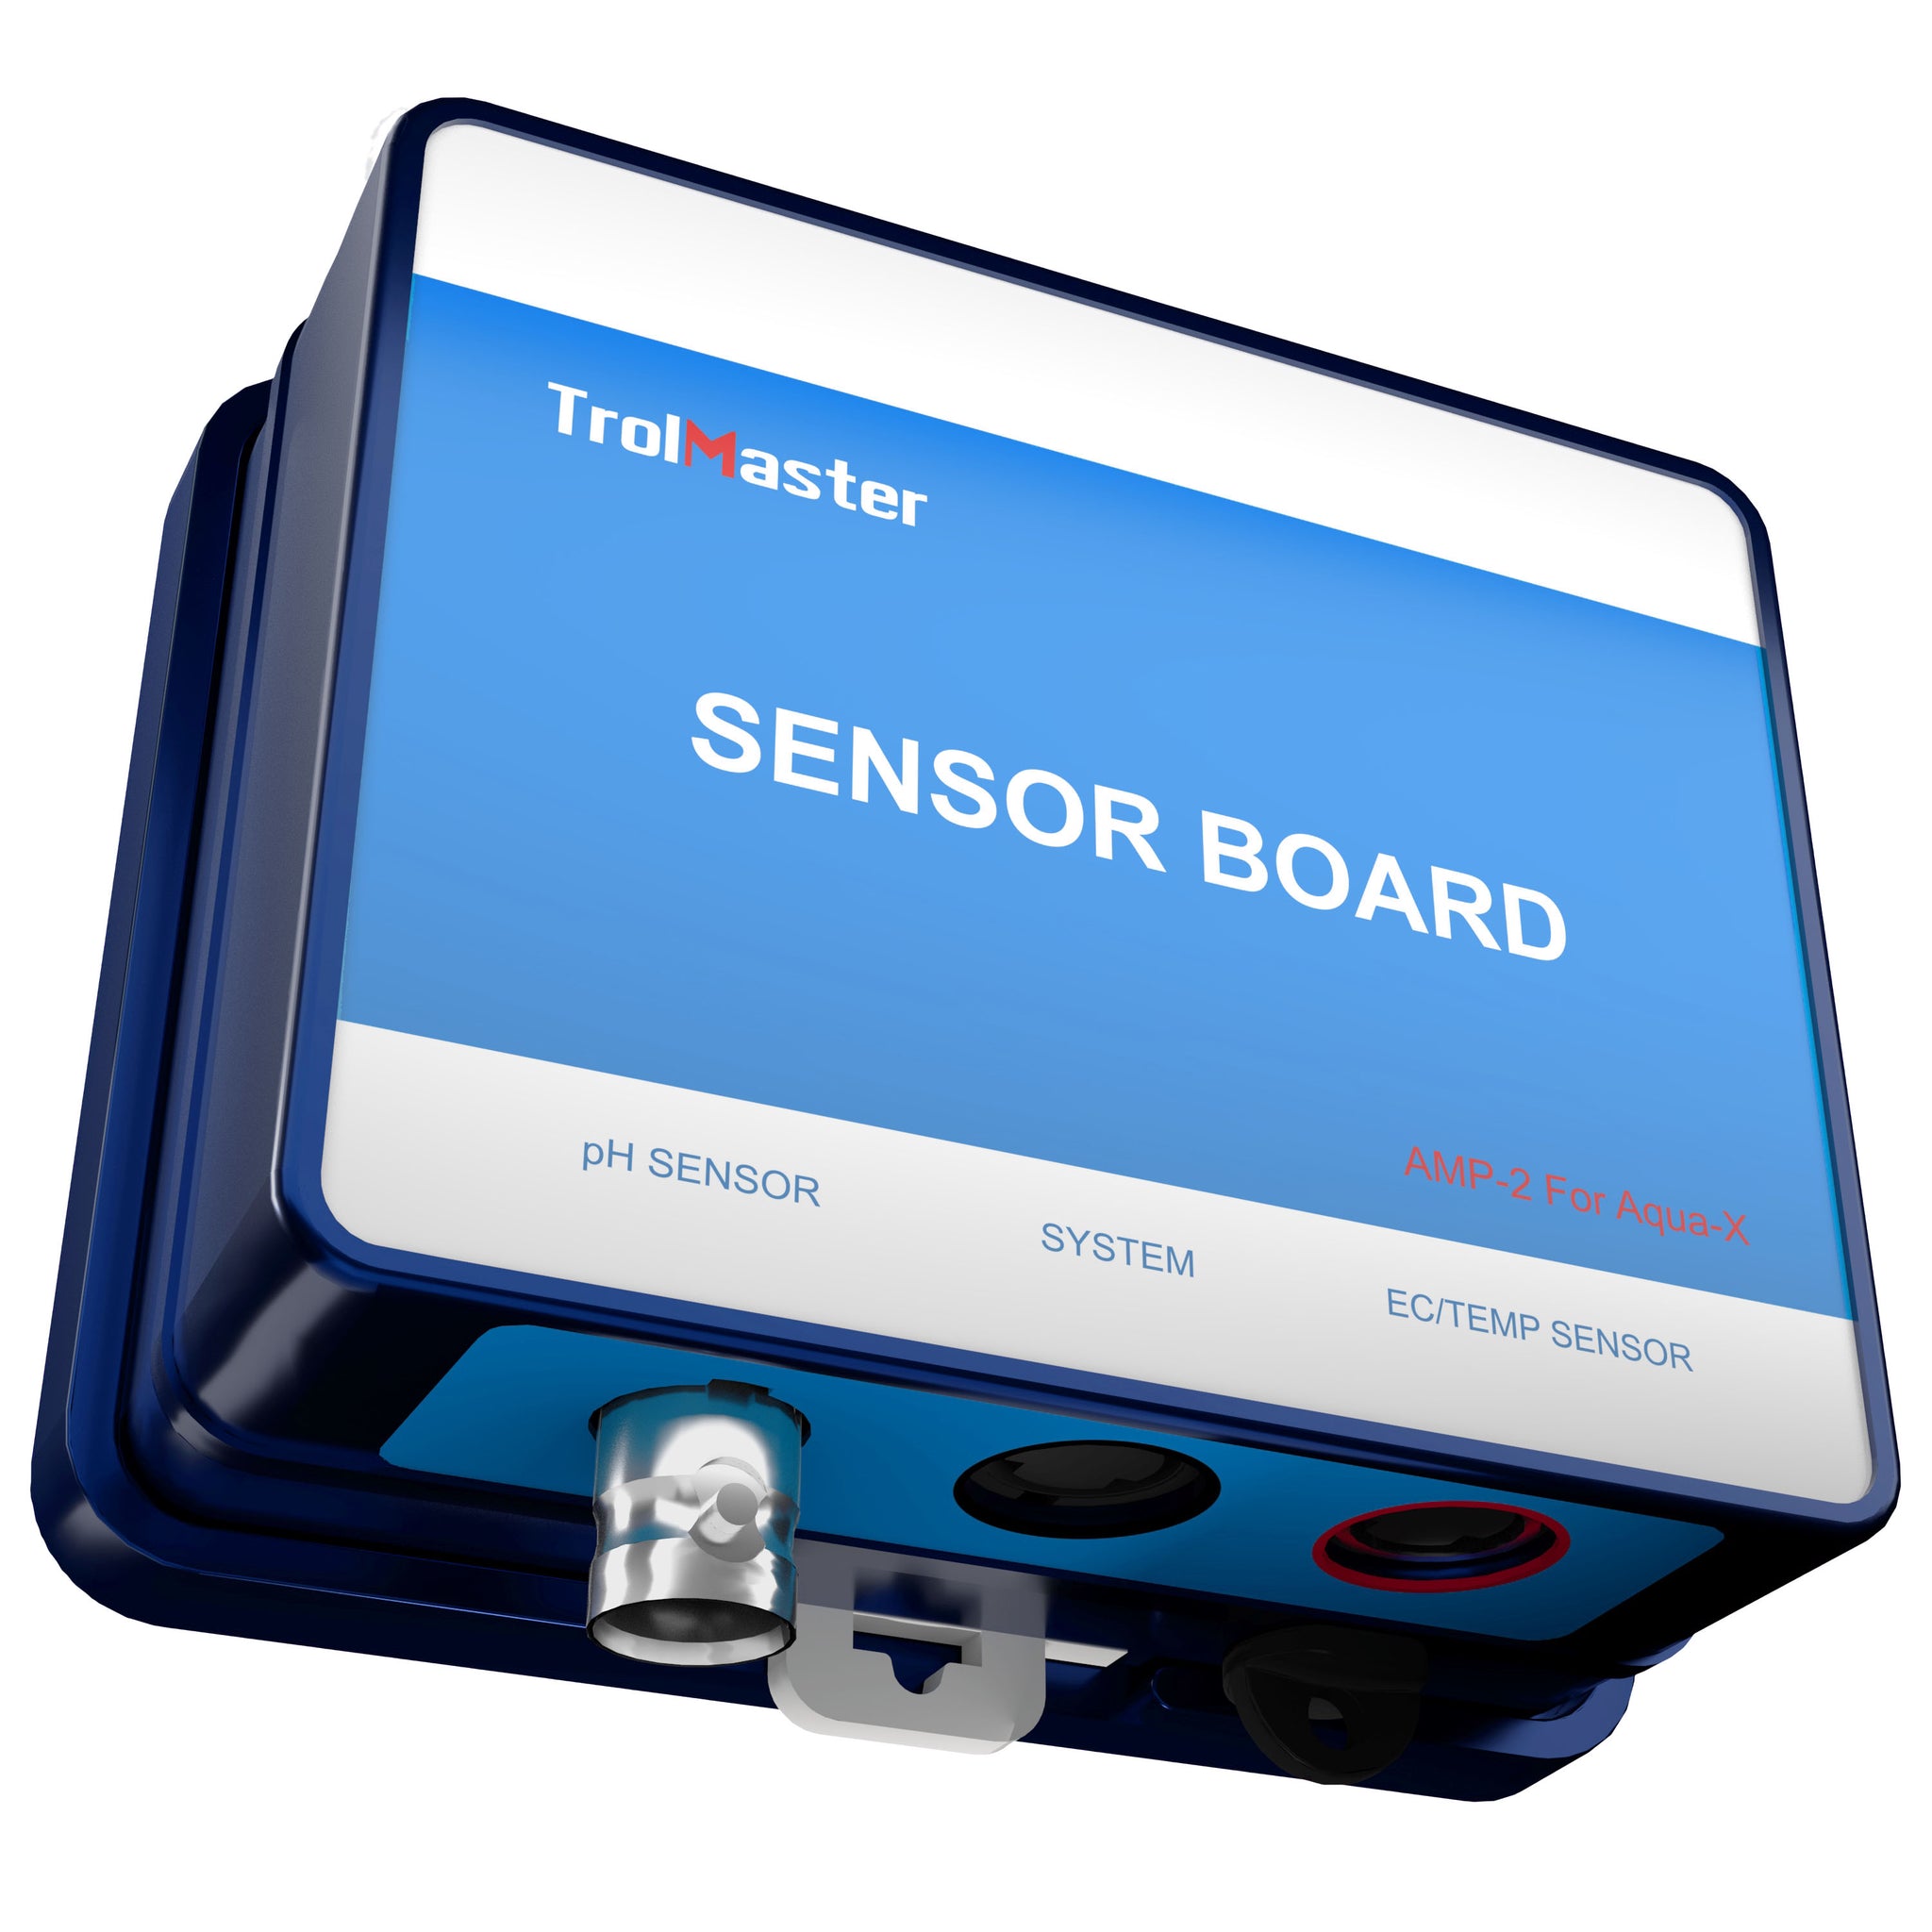 Sensor Board for Aqua-X only